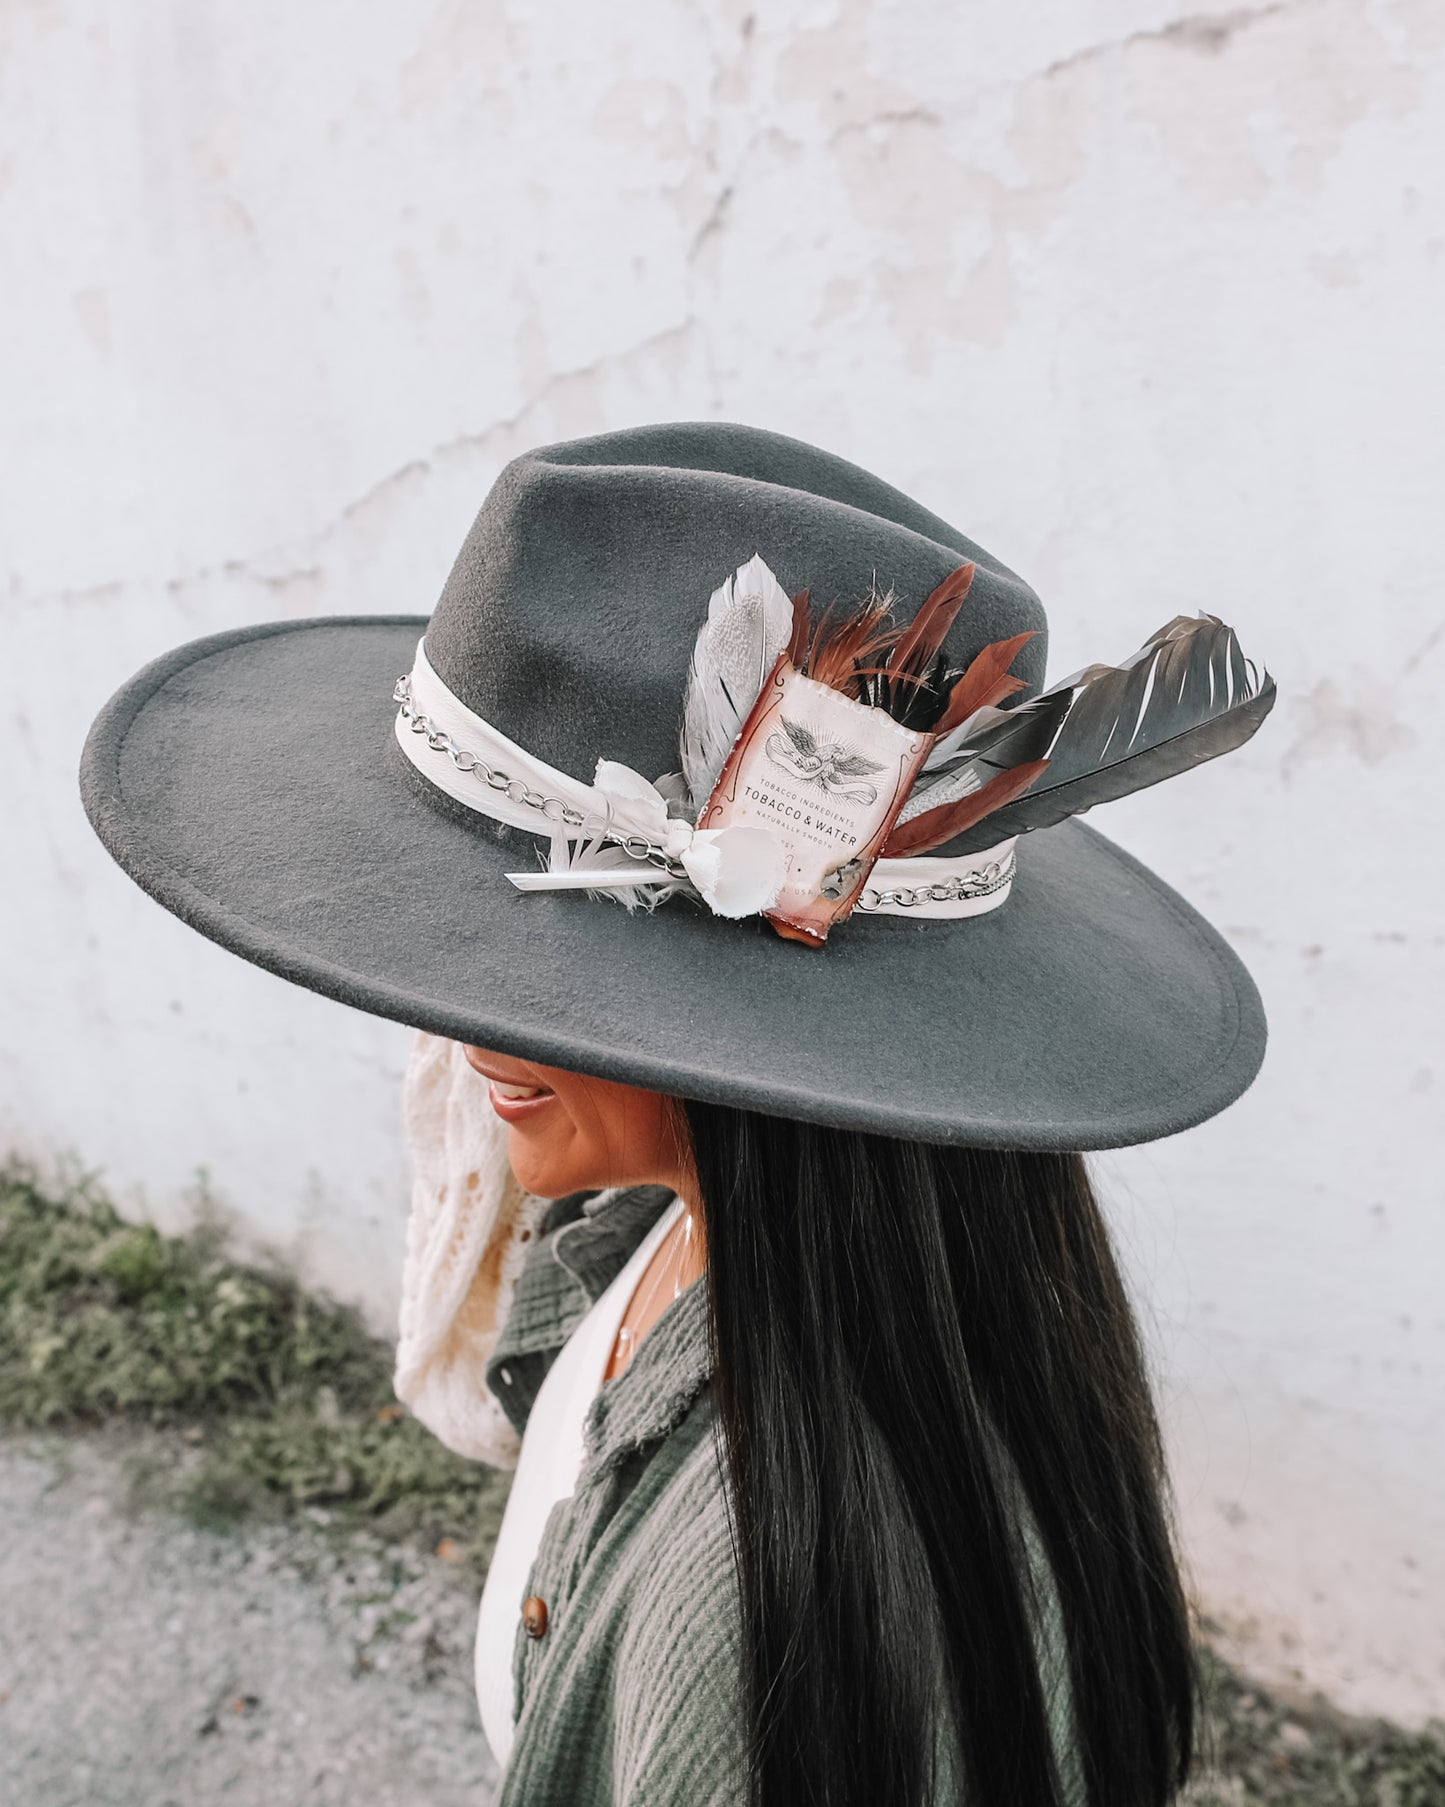 Blowin’ Smoke Wide Brim Western Hat